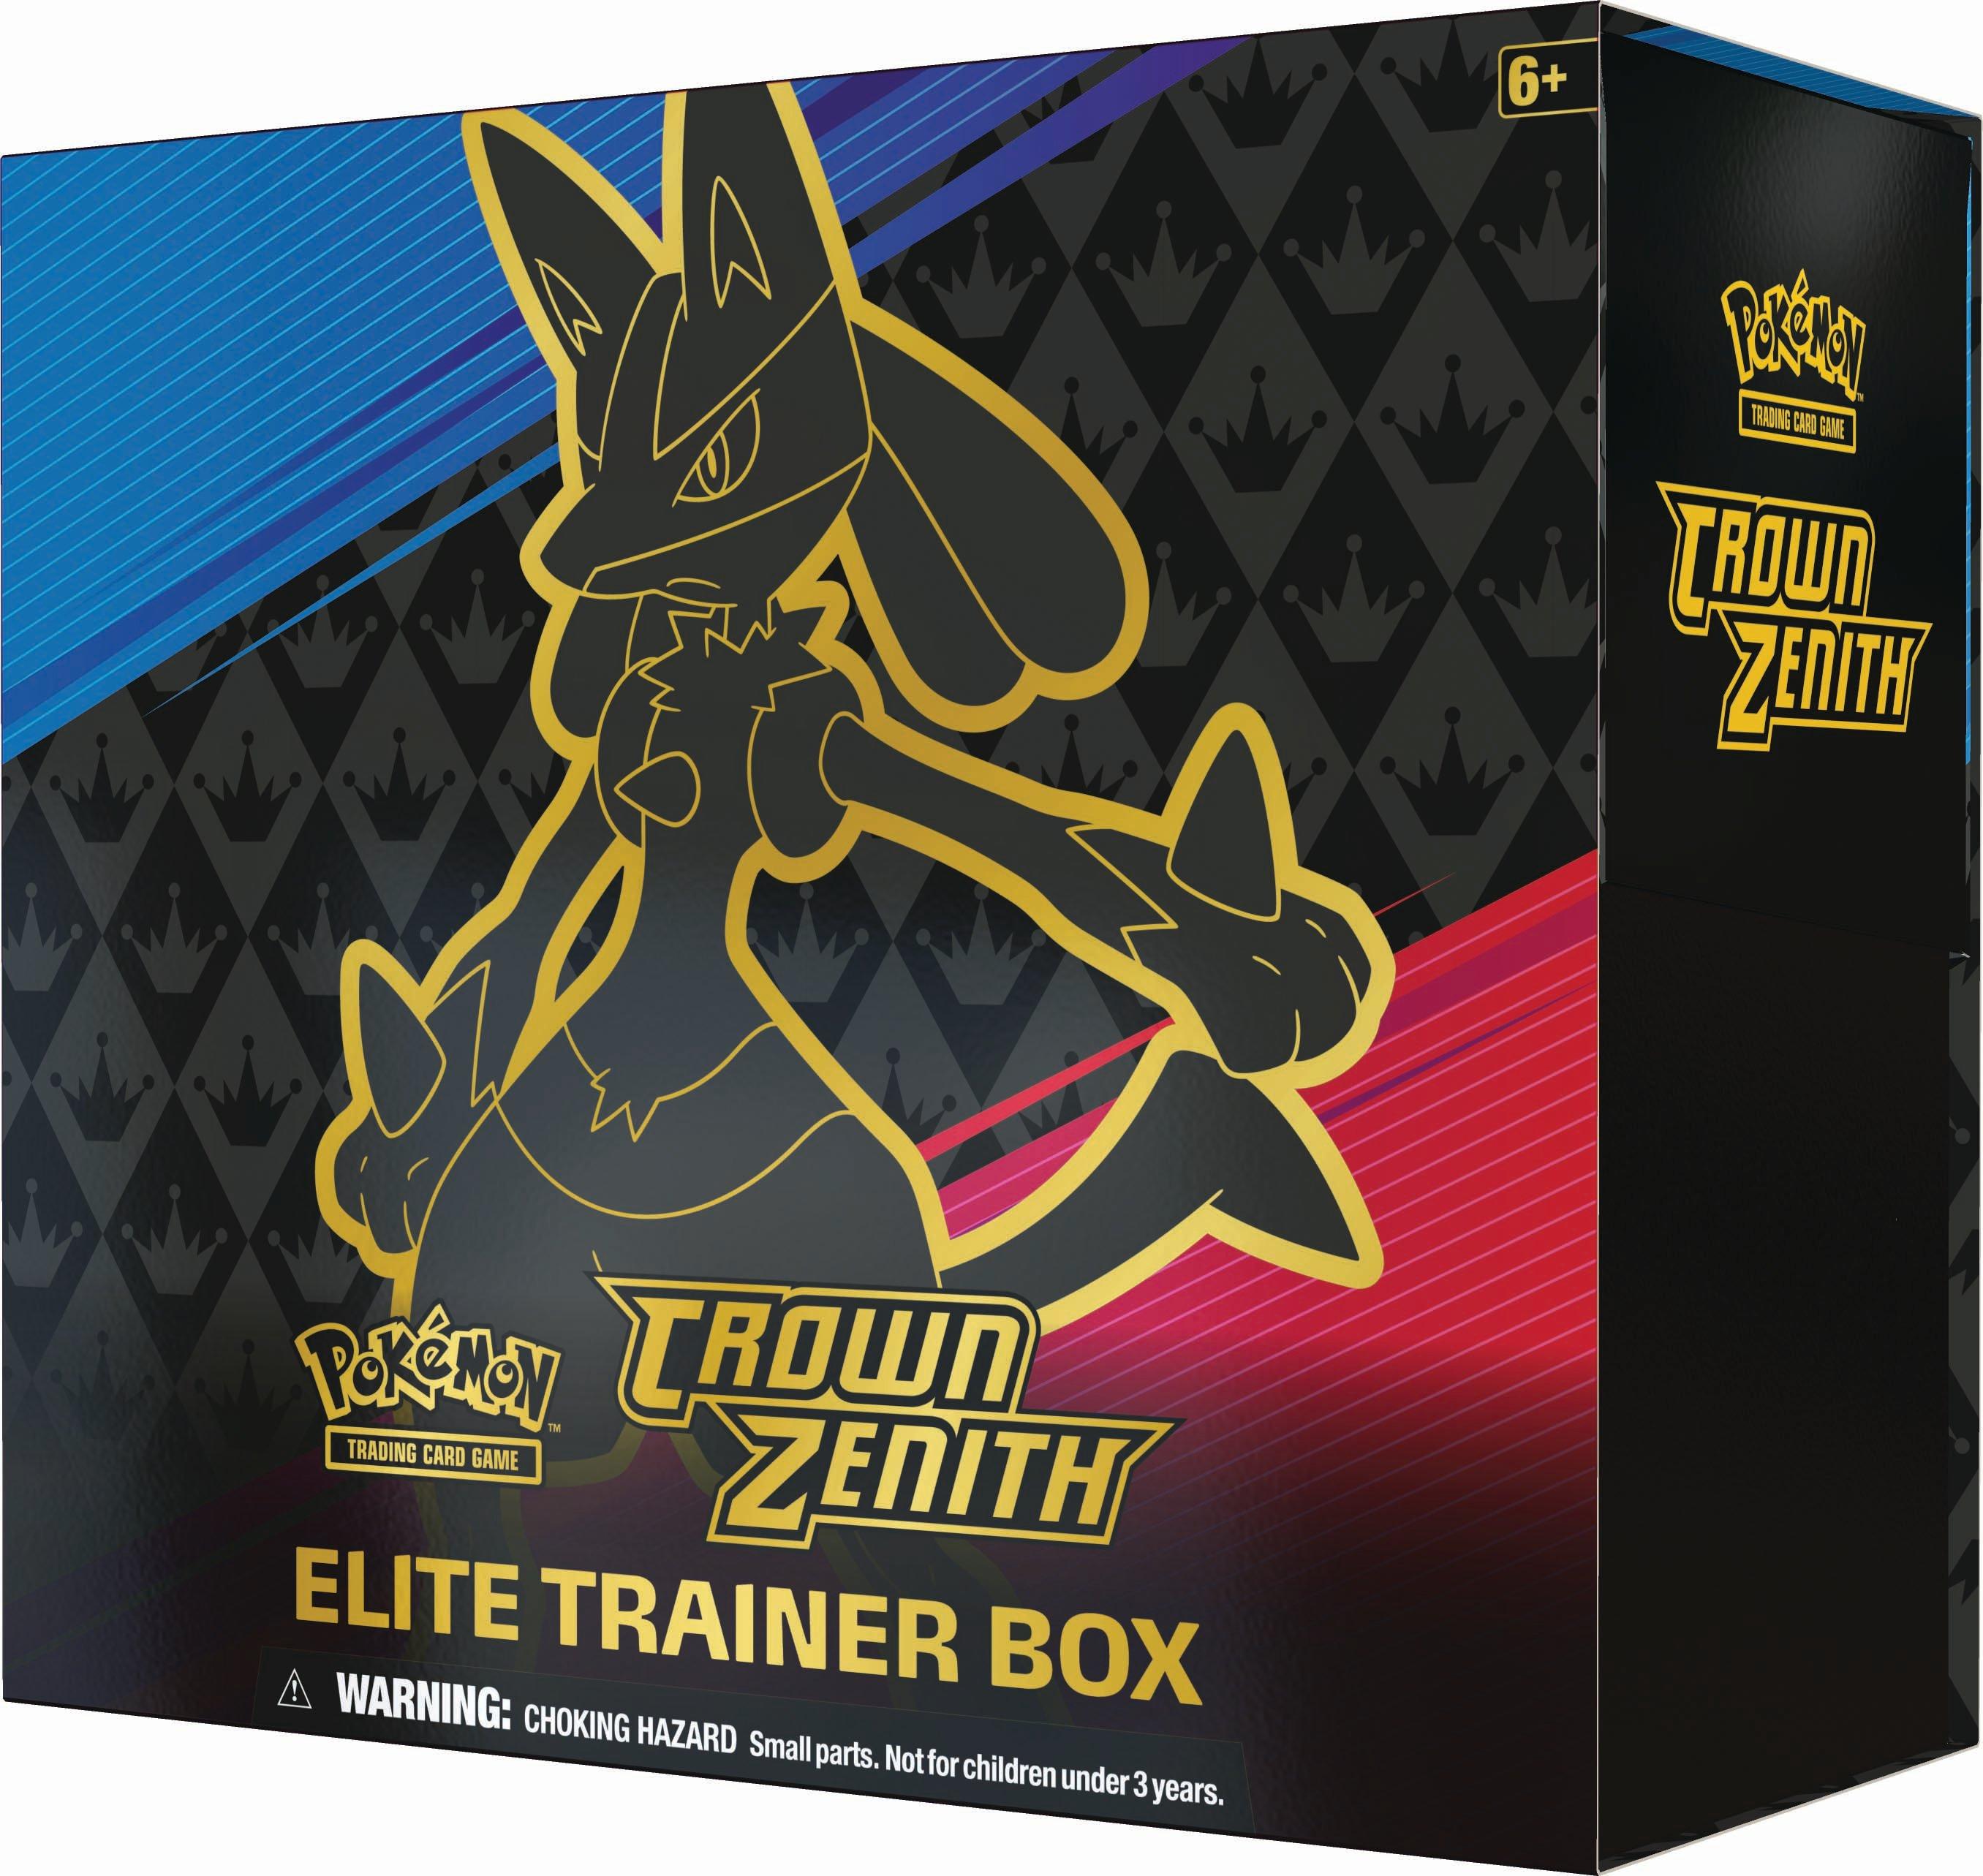 https://media.gamestop.com/i/gamestop/20001489_ALT02/Pokemon-Trading-Card-Game-Crown-Zenith-Elite-Trainer-Box?$pdp$